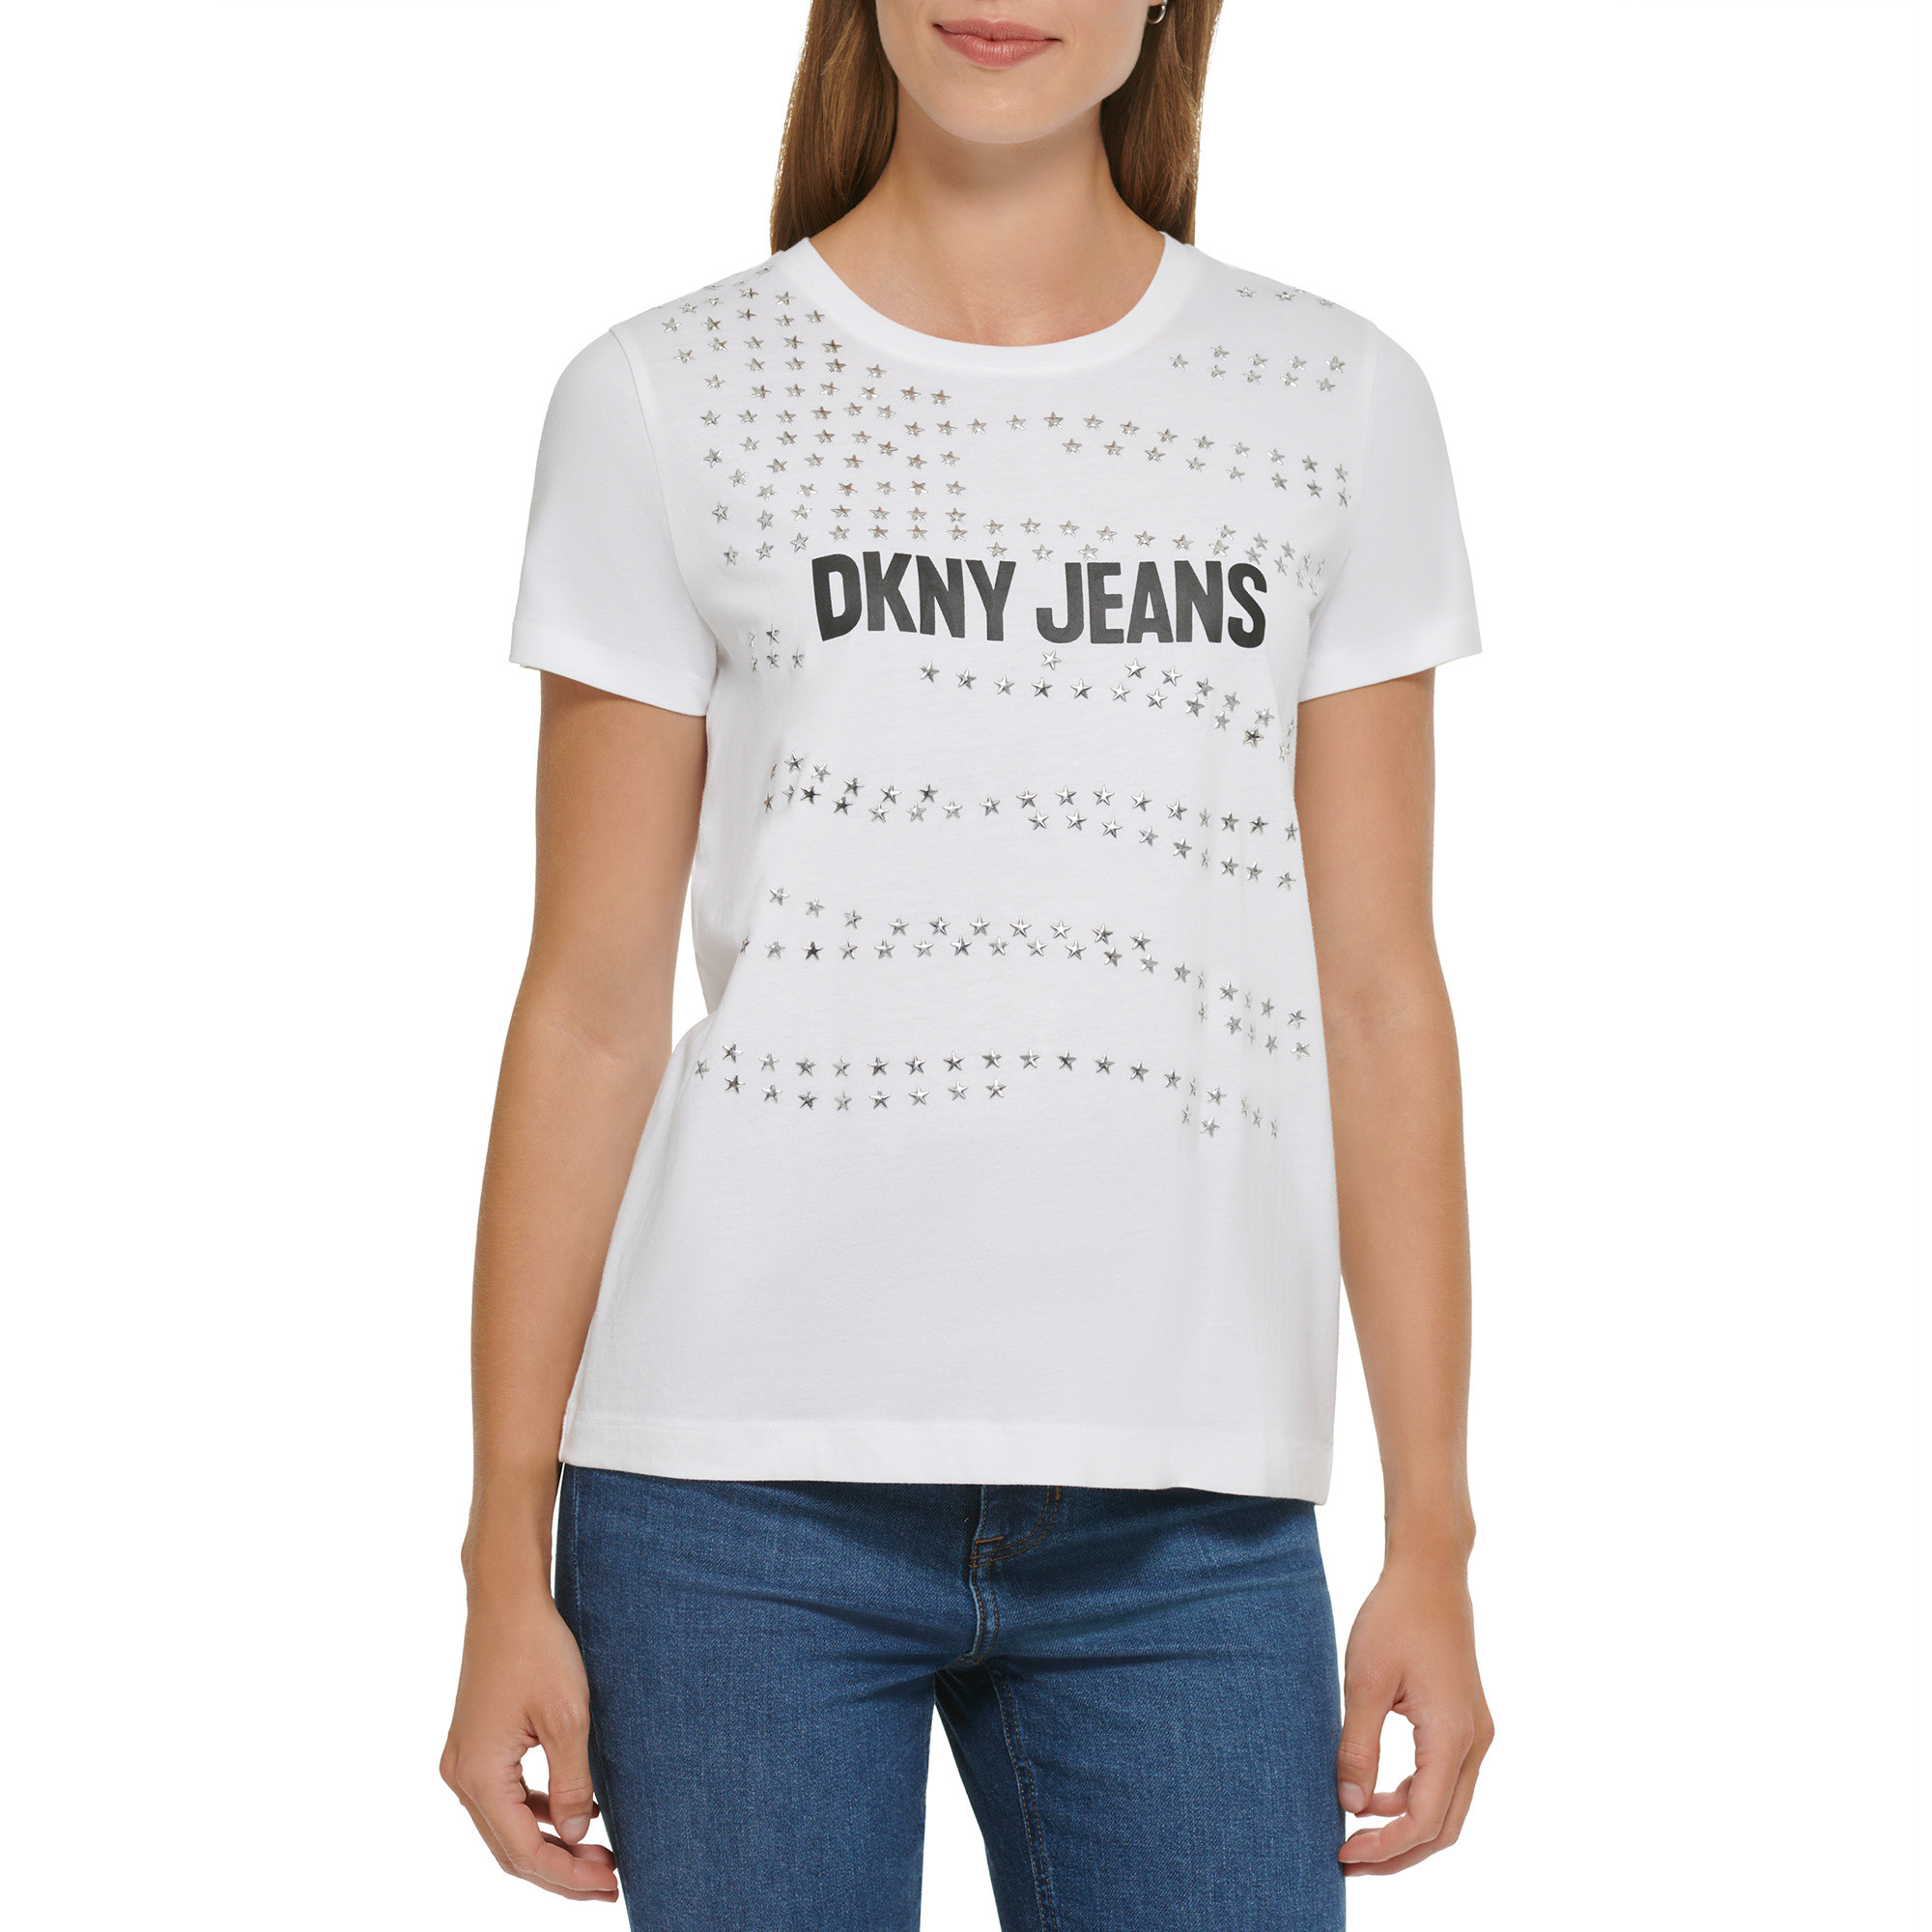 DKNY - T-shirt con logo, Bianco, large image number 3